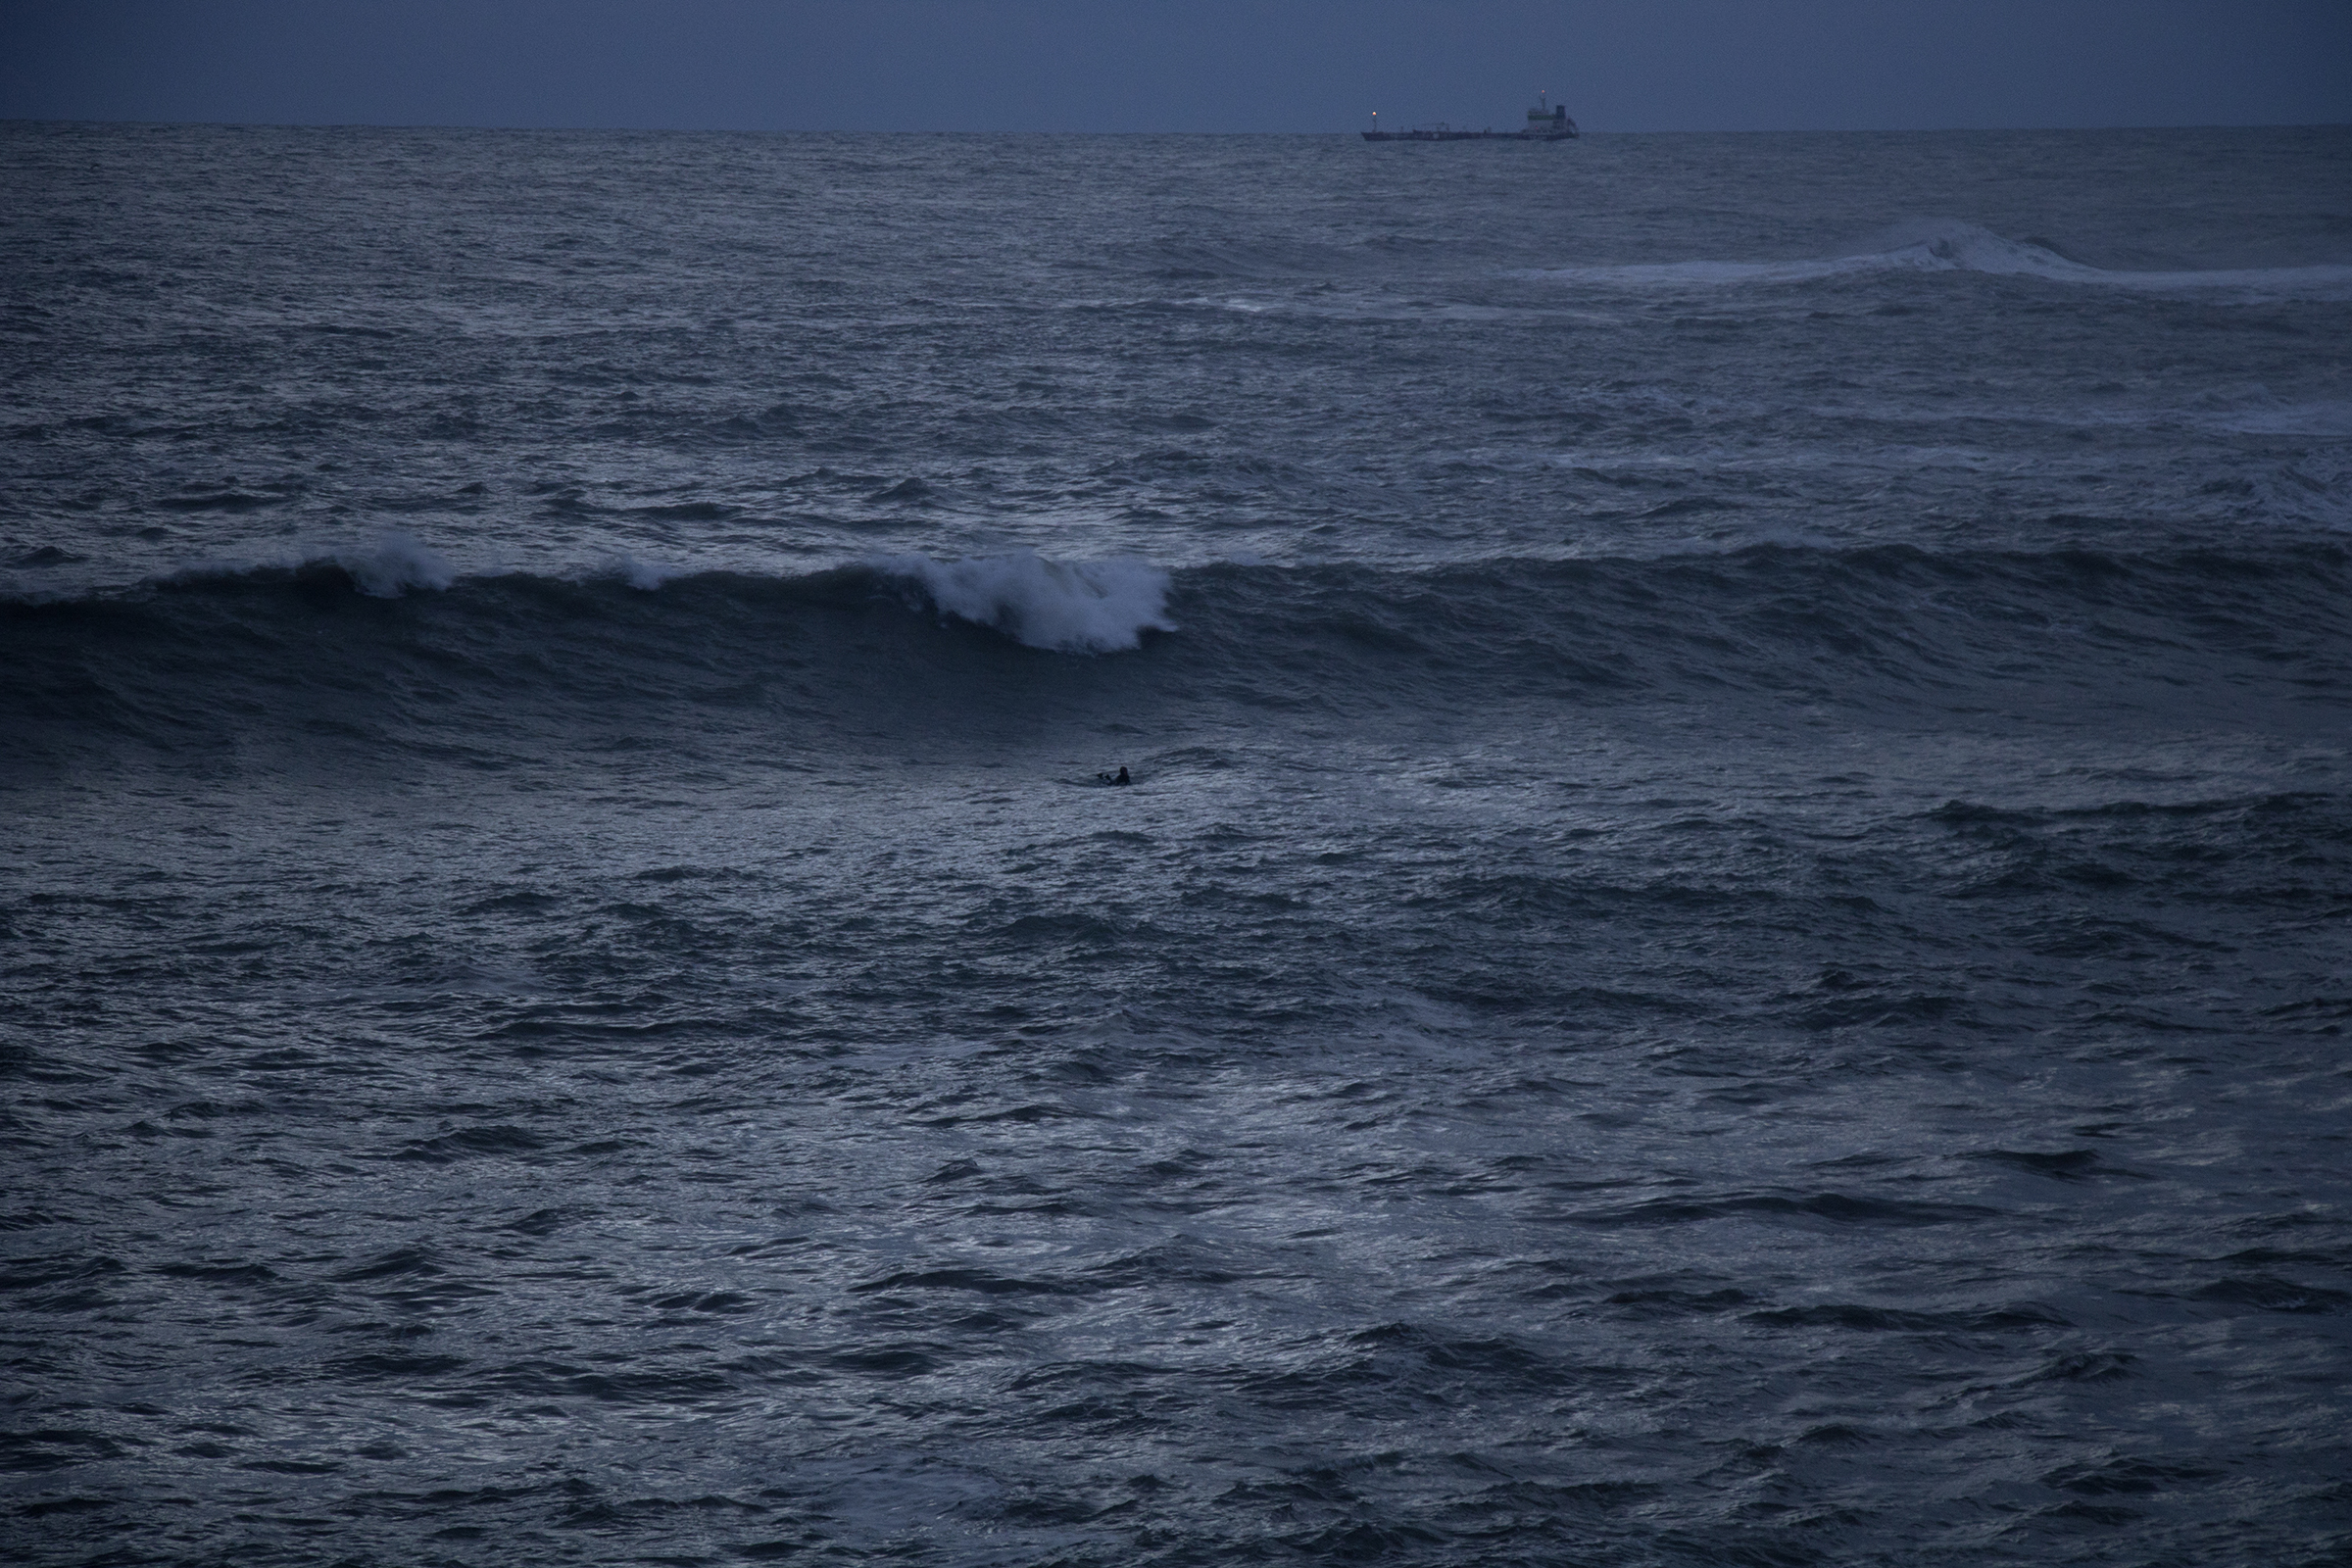 grosse vague, big swell, session nocturne, tempête, surf, surfeur, surfeuse.fr